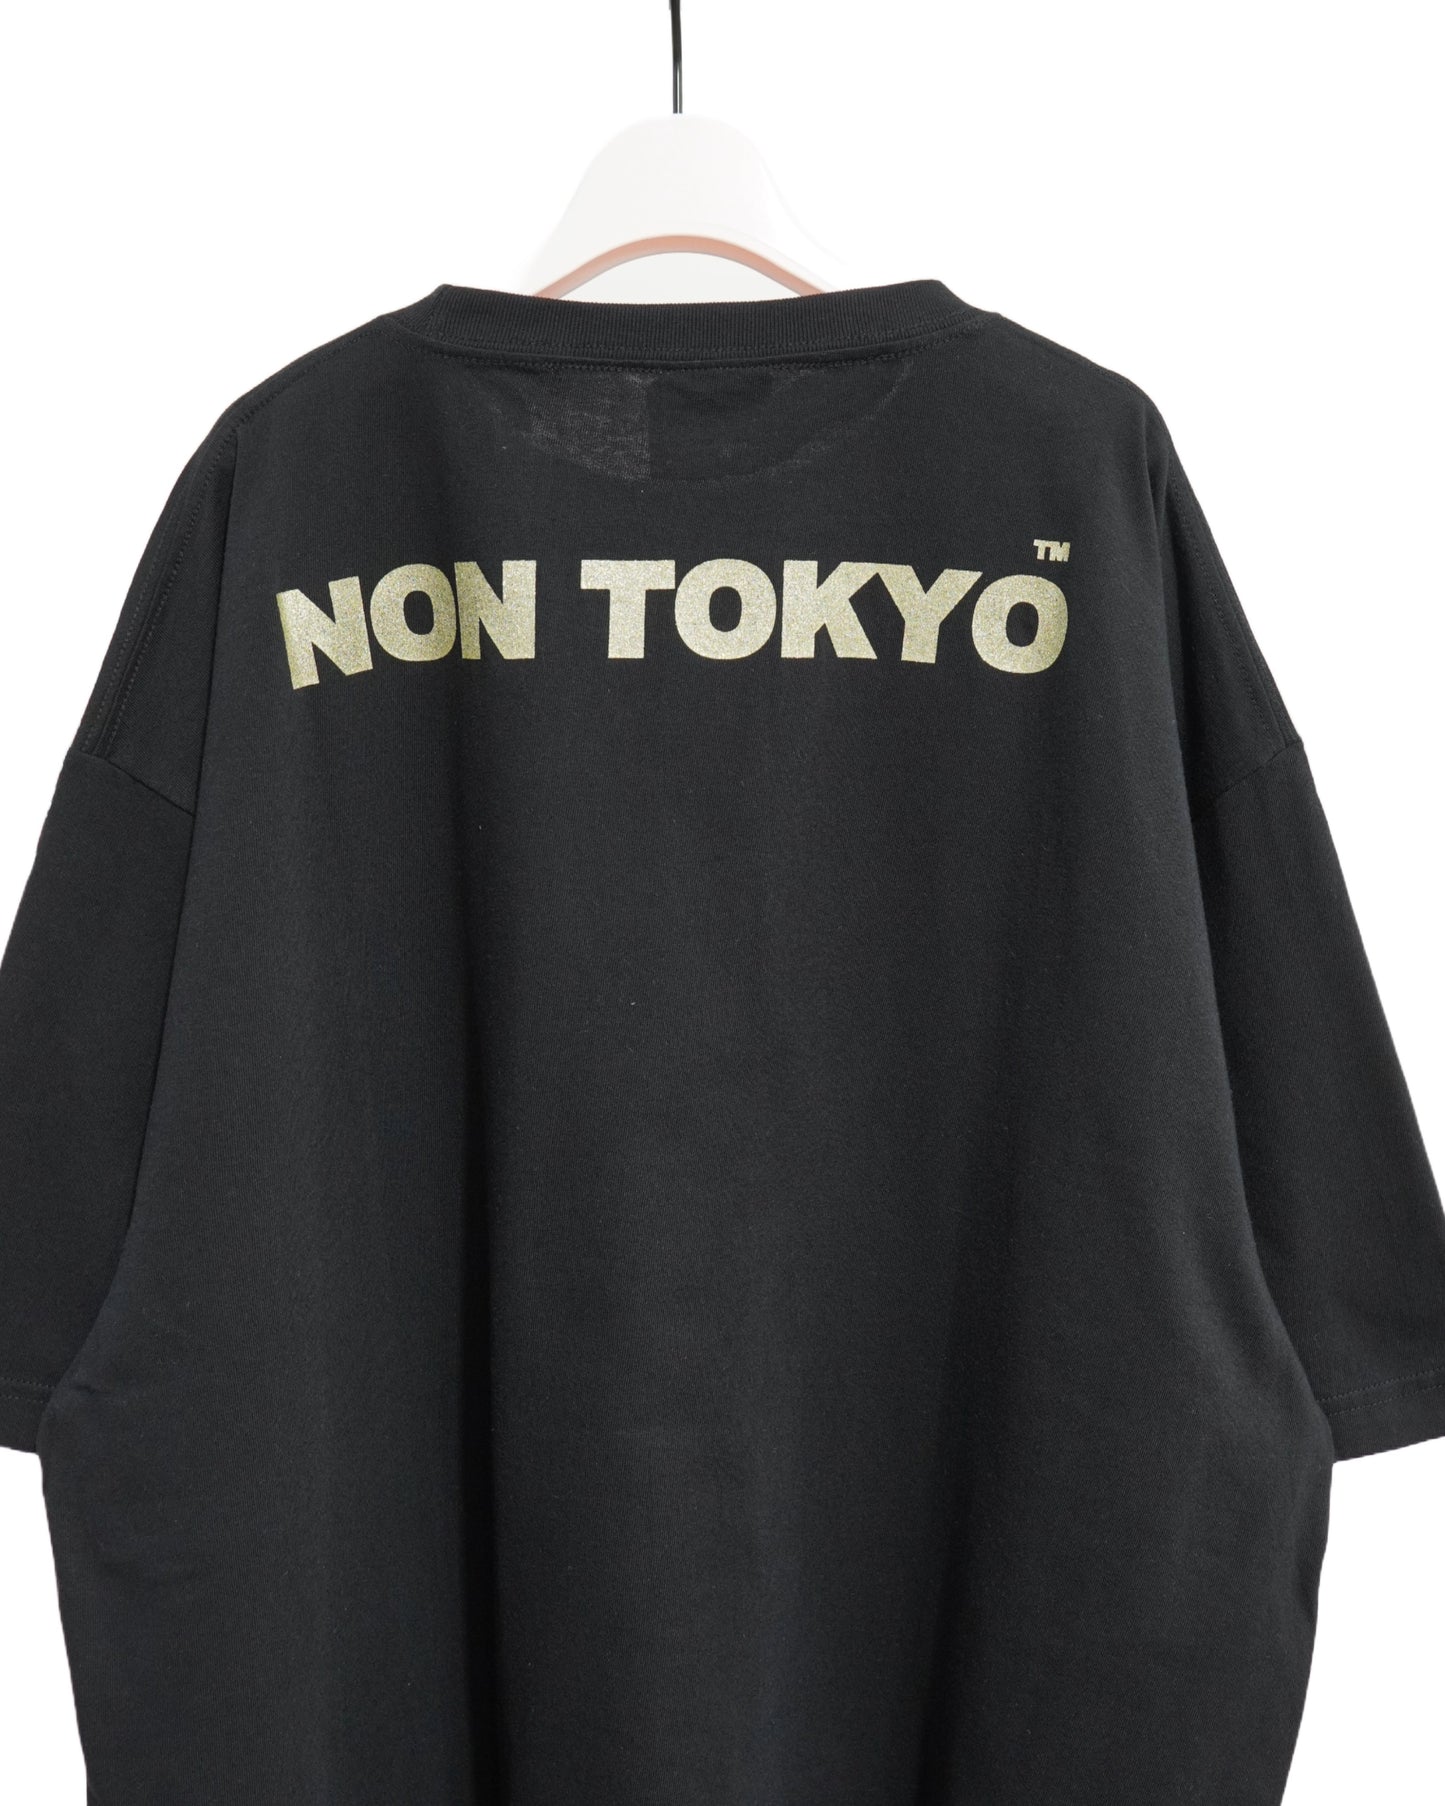 NON TOKYO /  PRINT BIG T-SHIRT (FACE / BLACK) / 〈ノントーキョー〉プリントビッグTシャツ (フェイス / ブラック)